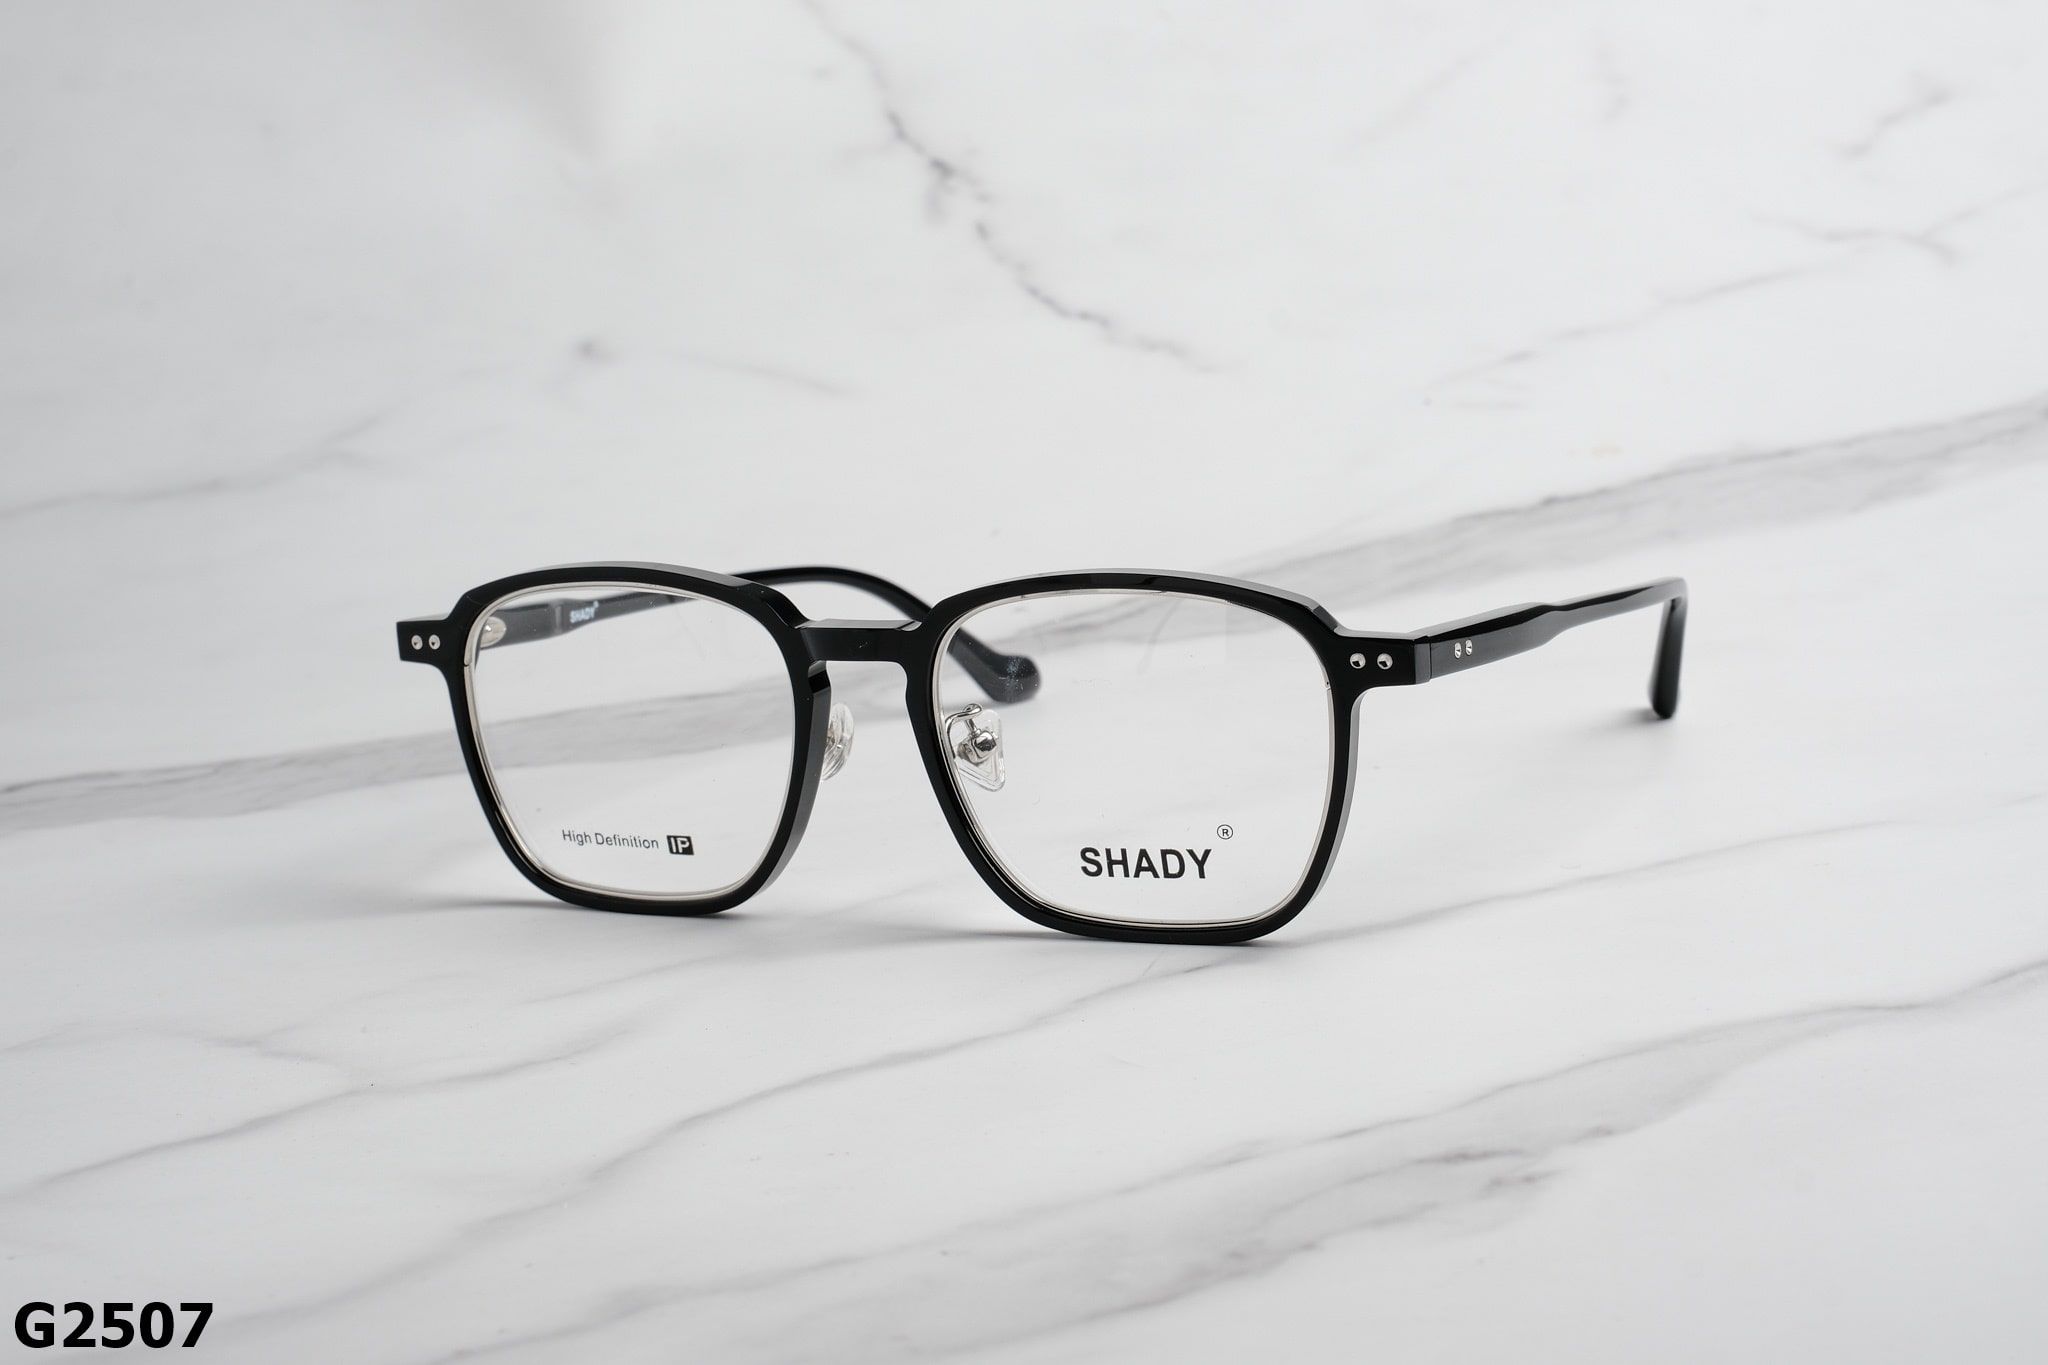  SHADY Eyewear - Glasses - G2507 